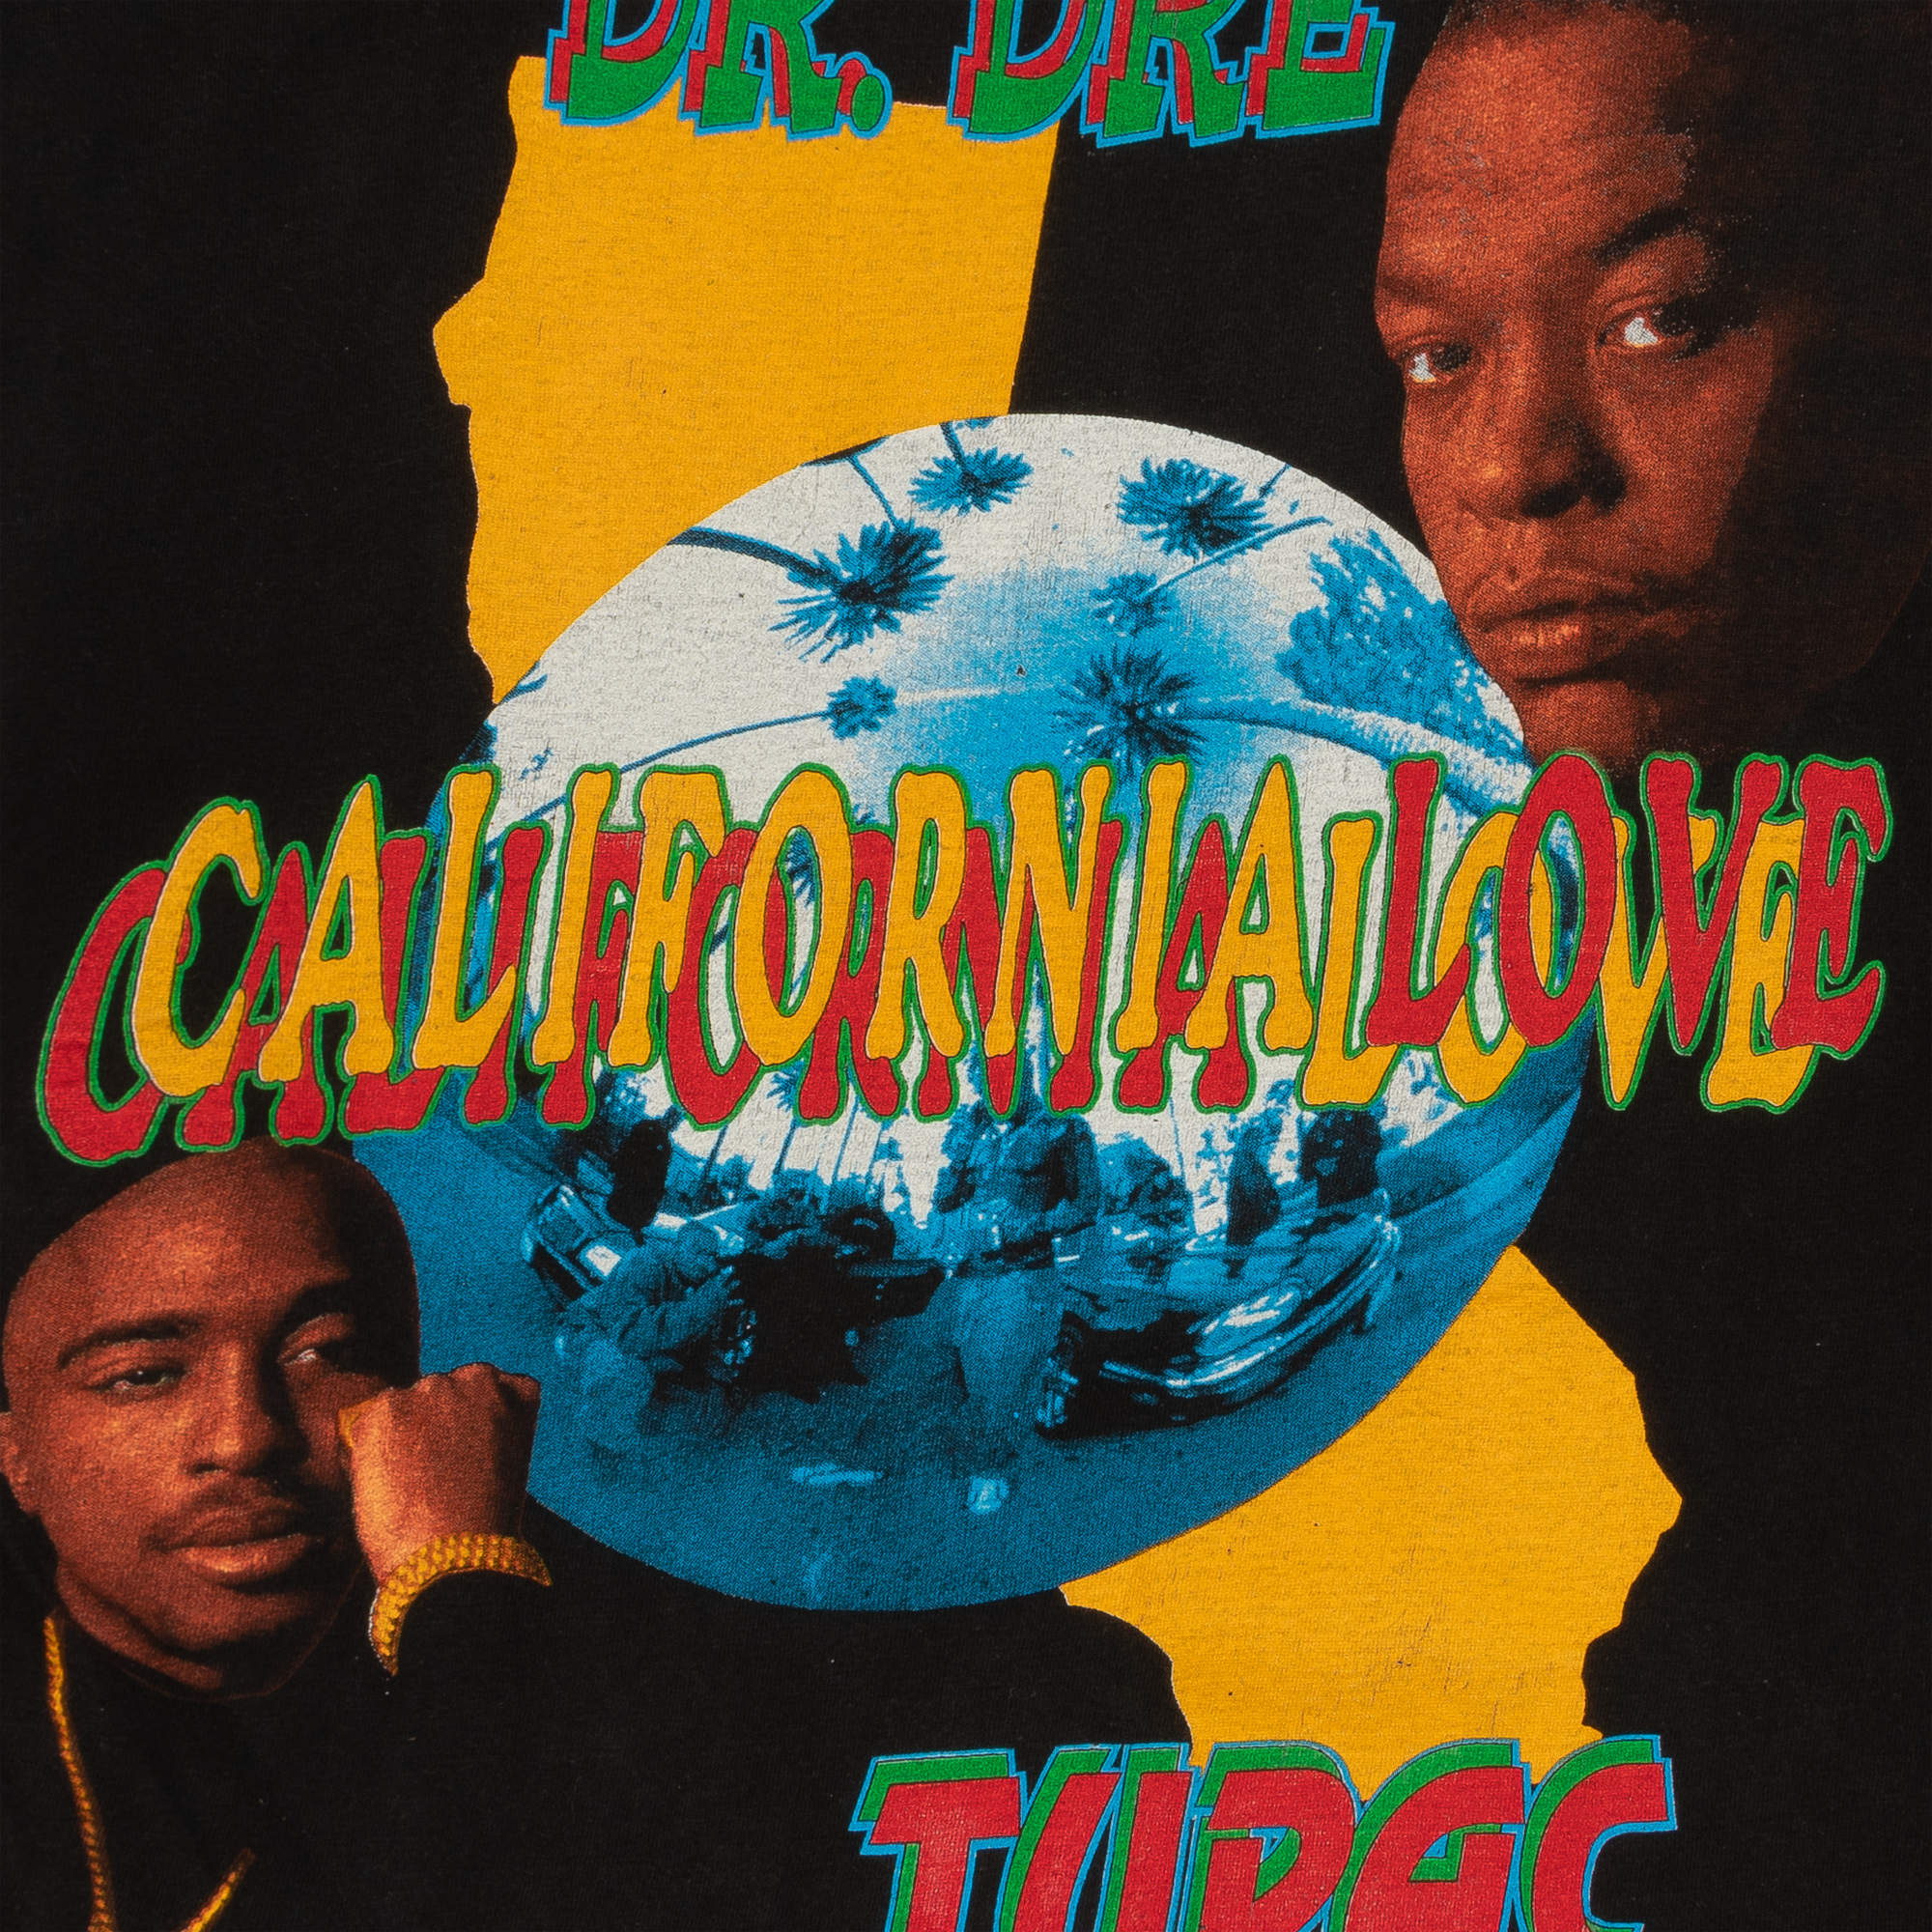 California Love- Tupac Classic Hip-Hop (COLOR) Classic  Kids T